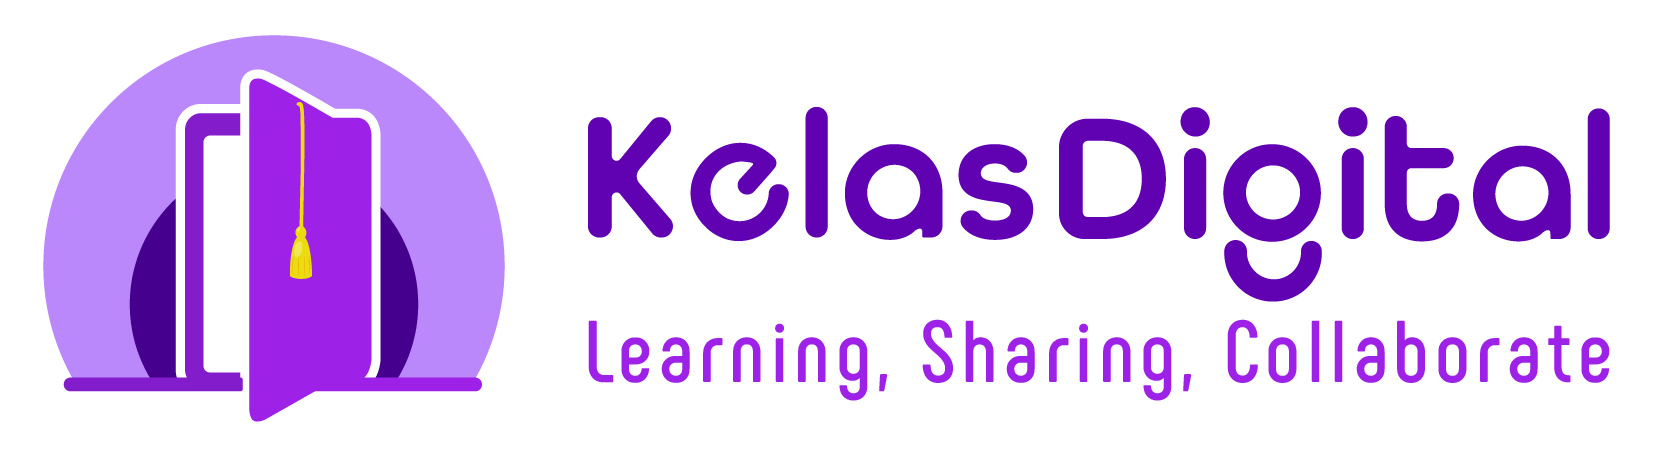 logo kelas digital